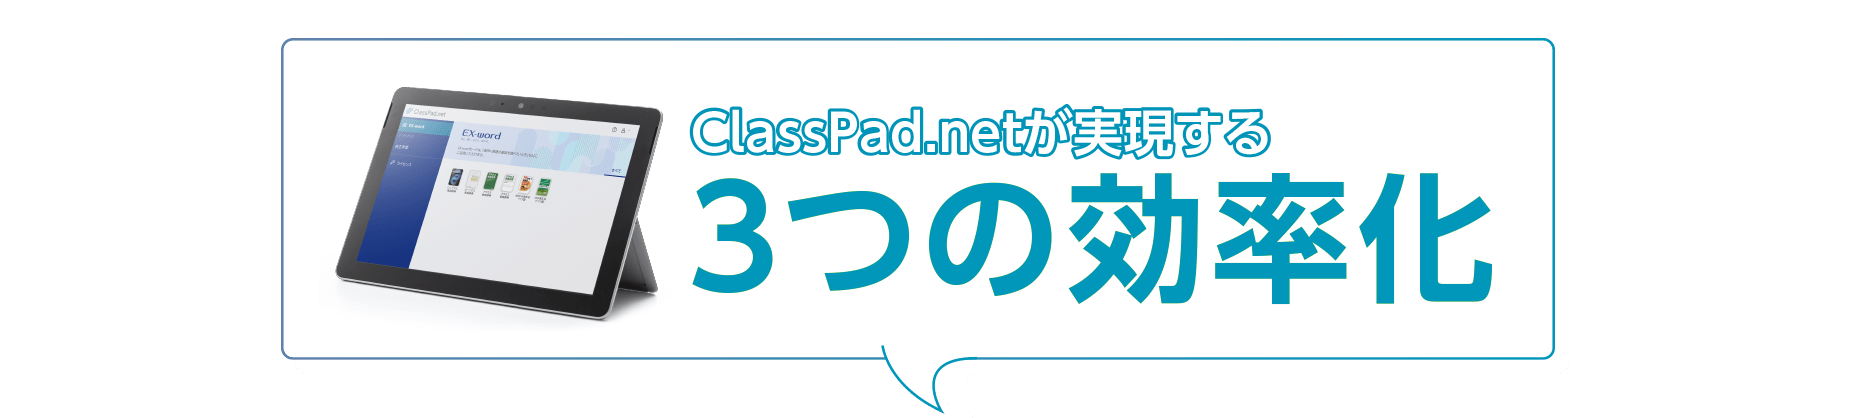 ClassPad.netが実現する３つの効率化